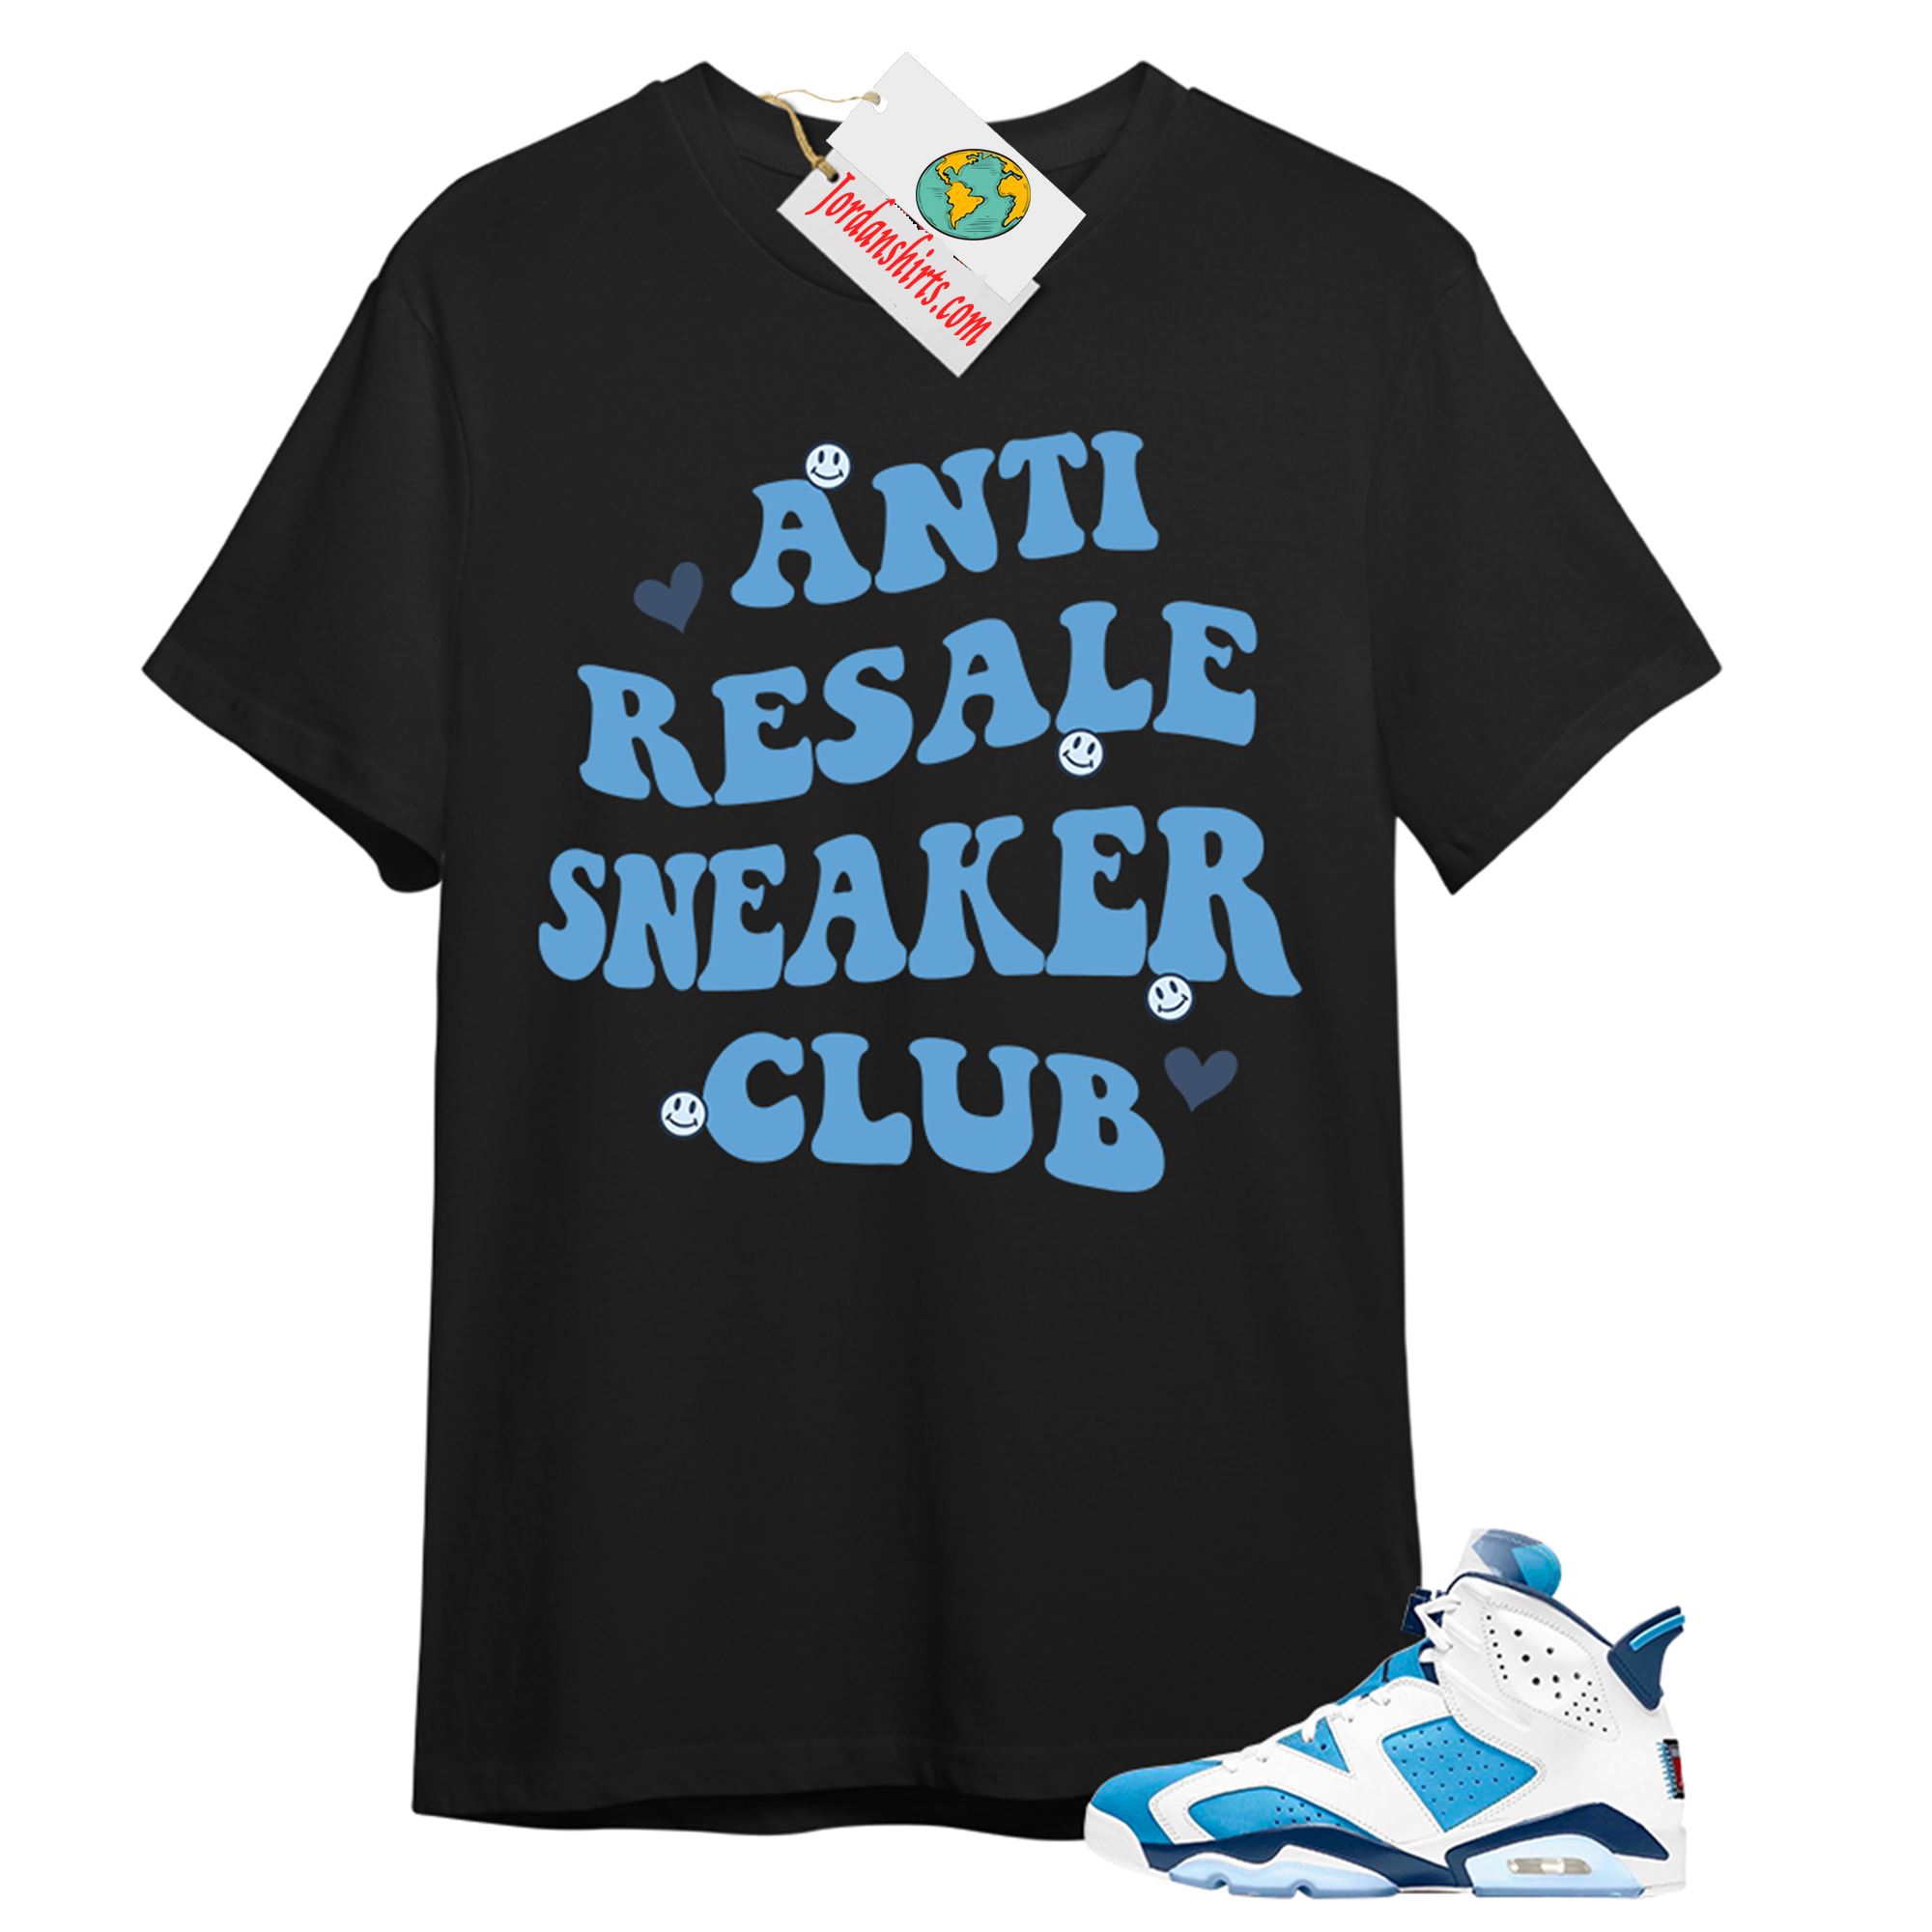 Jordan 6 Shirt, Anti Resale Sneaker Club Black T-shirt Air Jordan 6 Unc 6s Full Size Up To 5xl